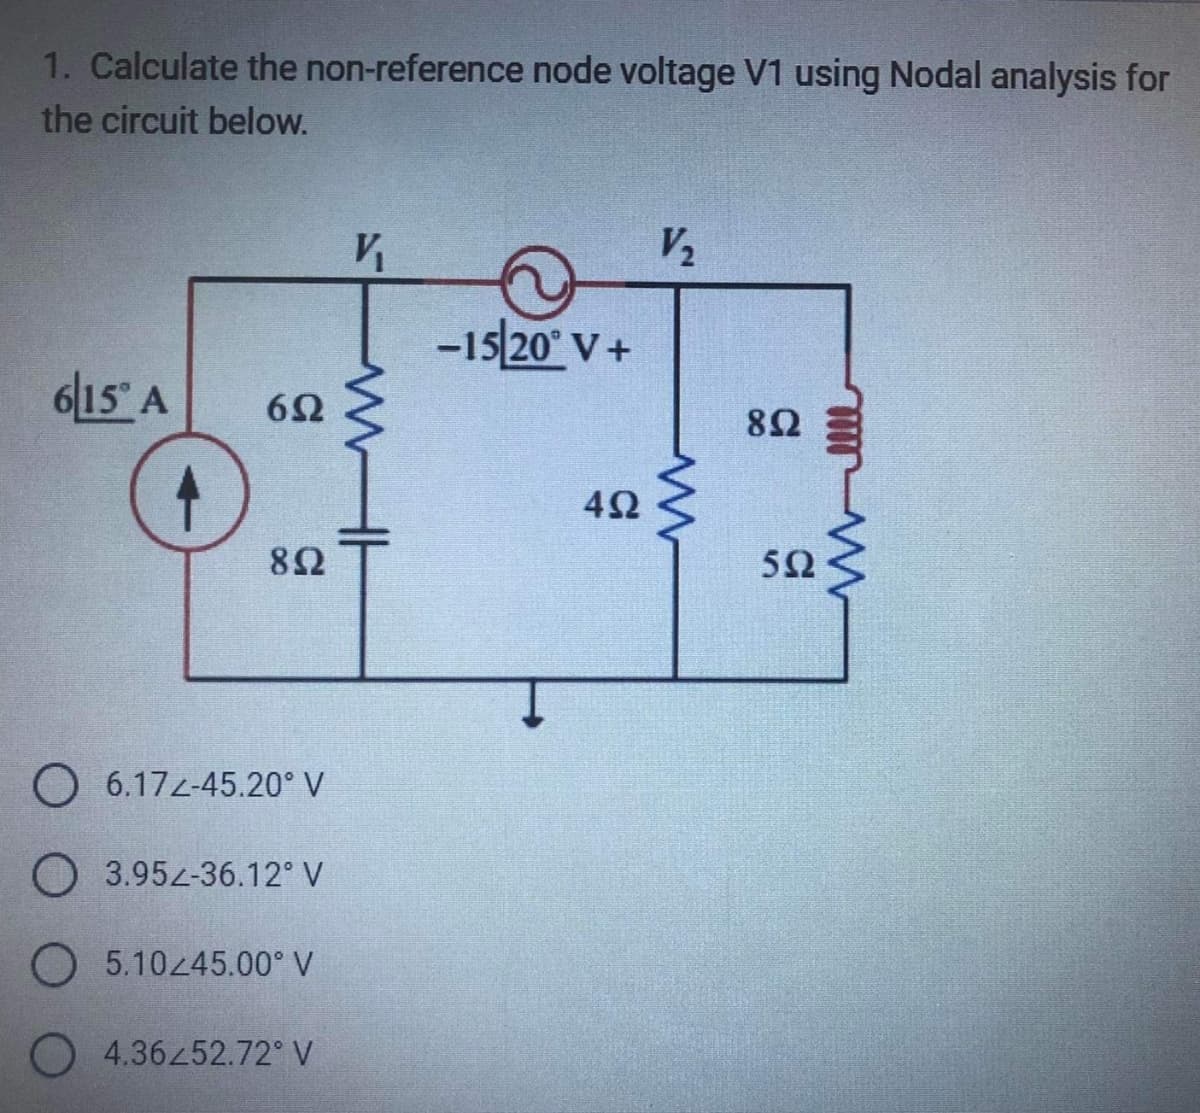 1. Calculate the non-reference node voltage V1 using Nodal analysis for
the circuit below.
615 A
652
892
O 6.172-45.20° V
O 3.952-36.12° V
O 5.10<45.00° V
O4.36252.72° V
V₁
WH
-15/20° V+
492
V₂
www
892
552
well